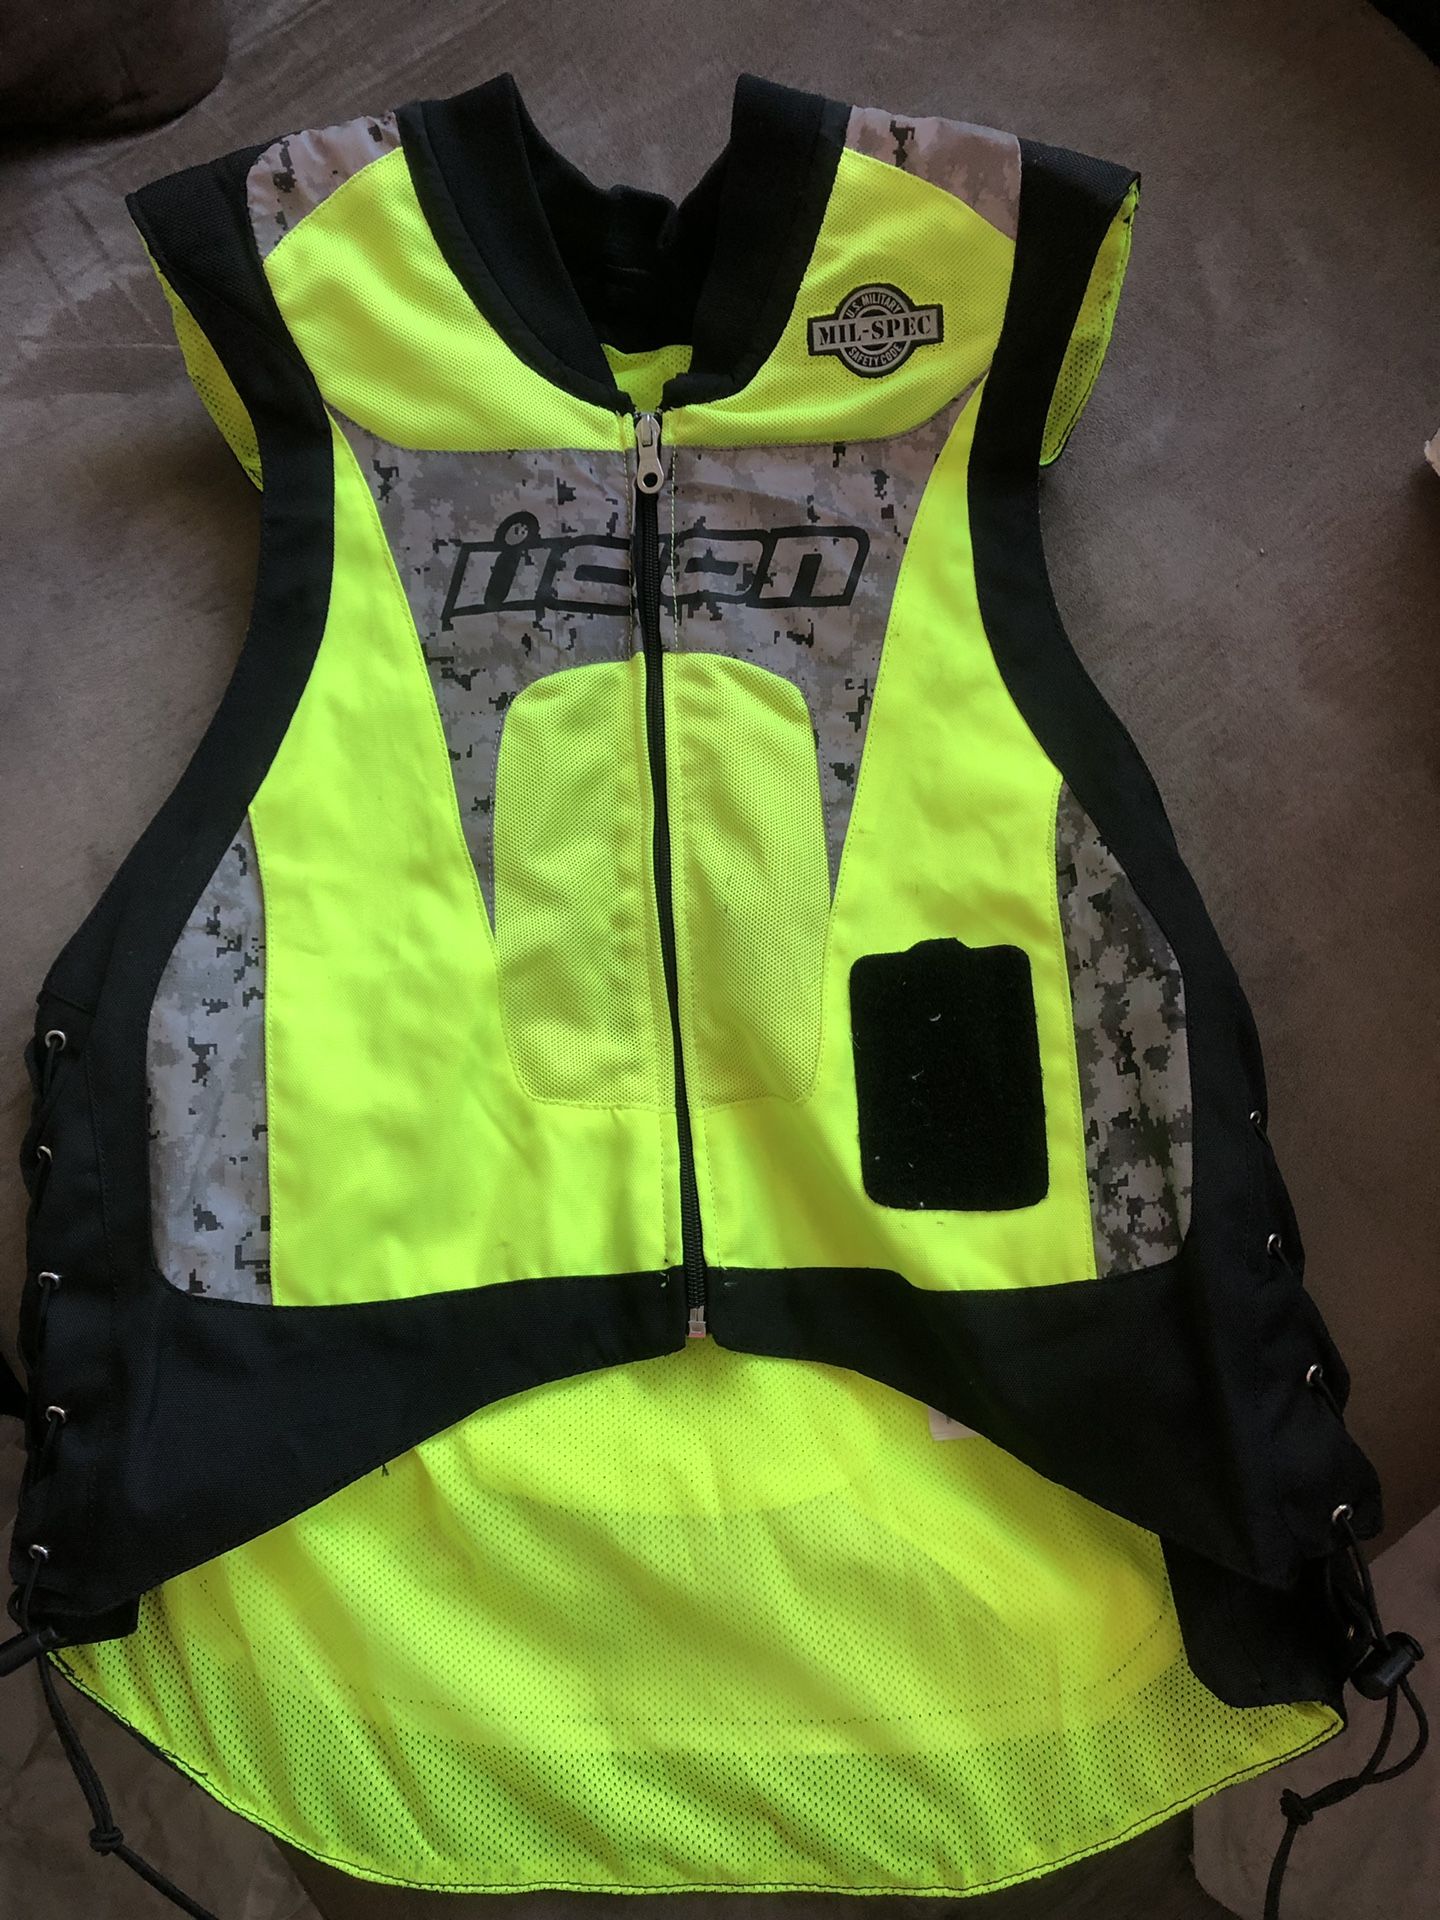 Motorcycle vest size S/M